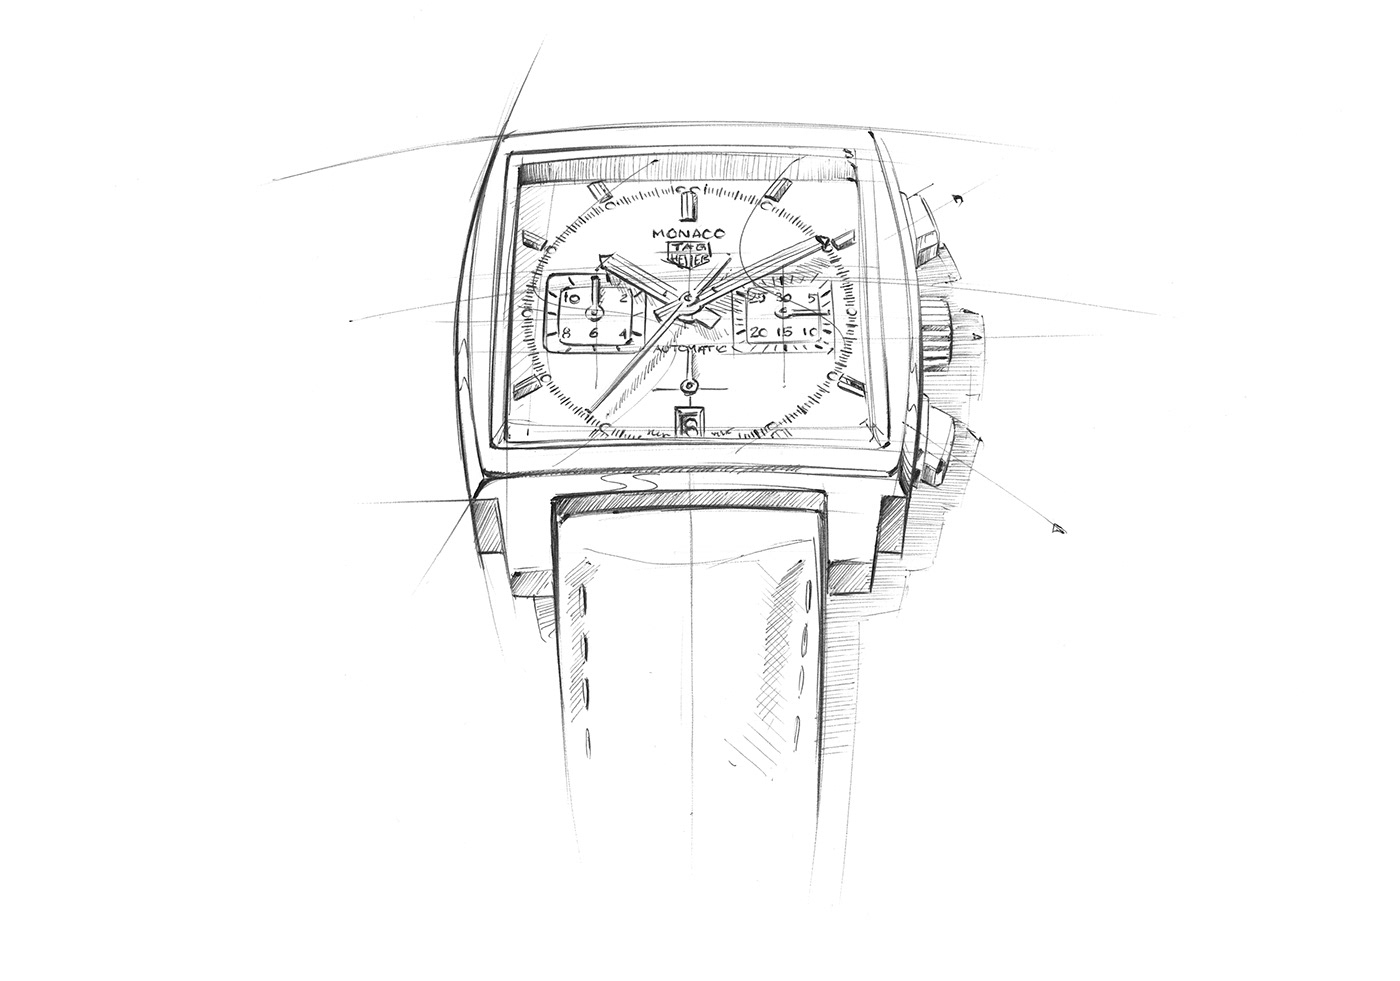 tagheuer watches for men watch design Watches luxury montre watch horlogerie timepiece horology